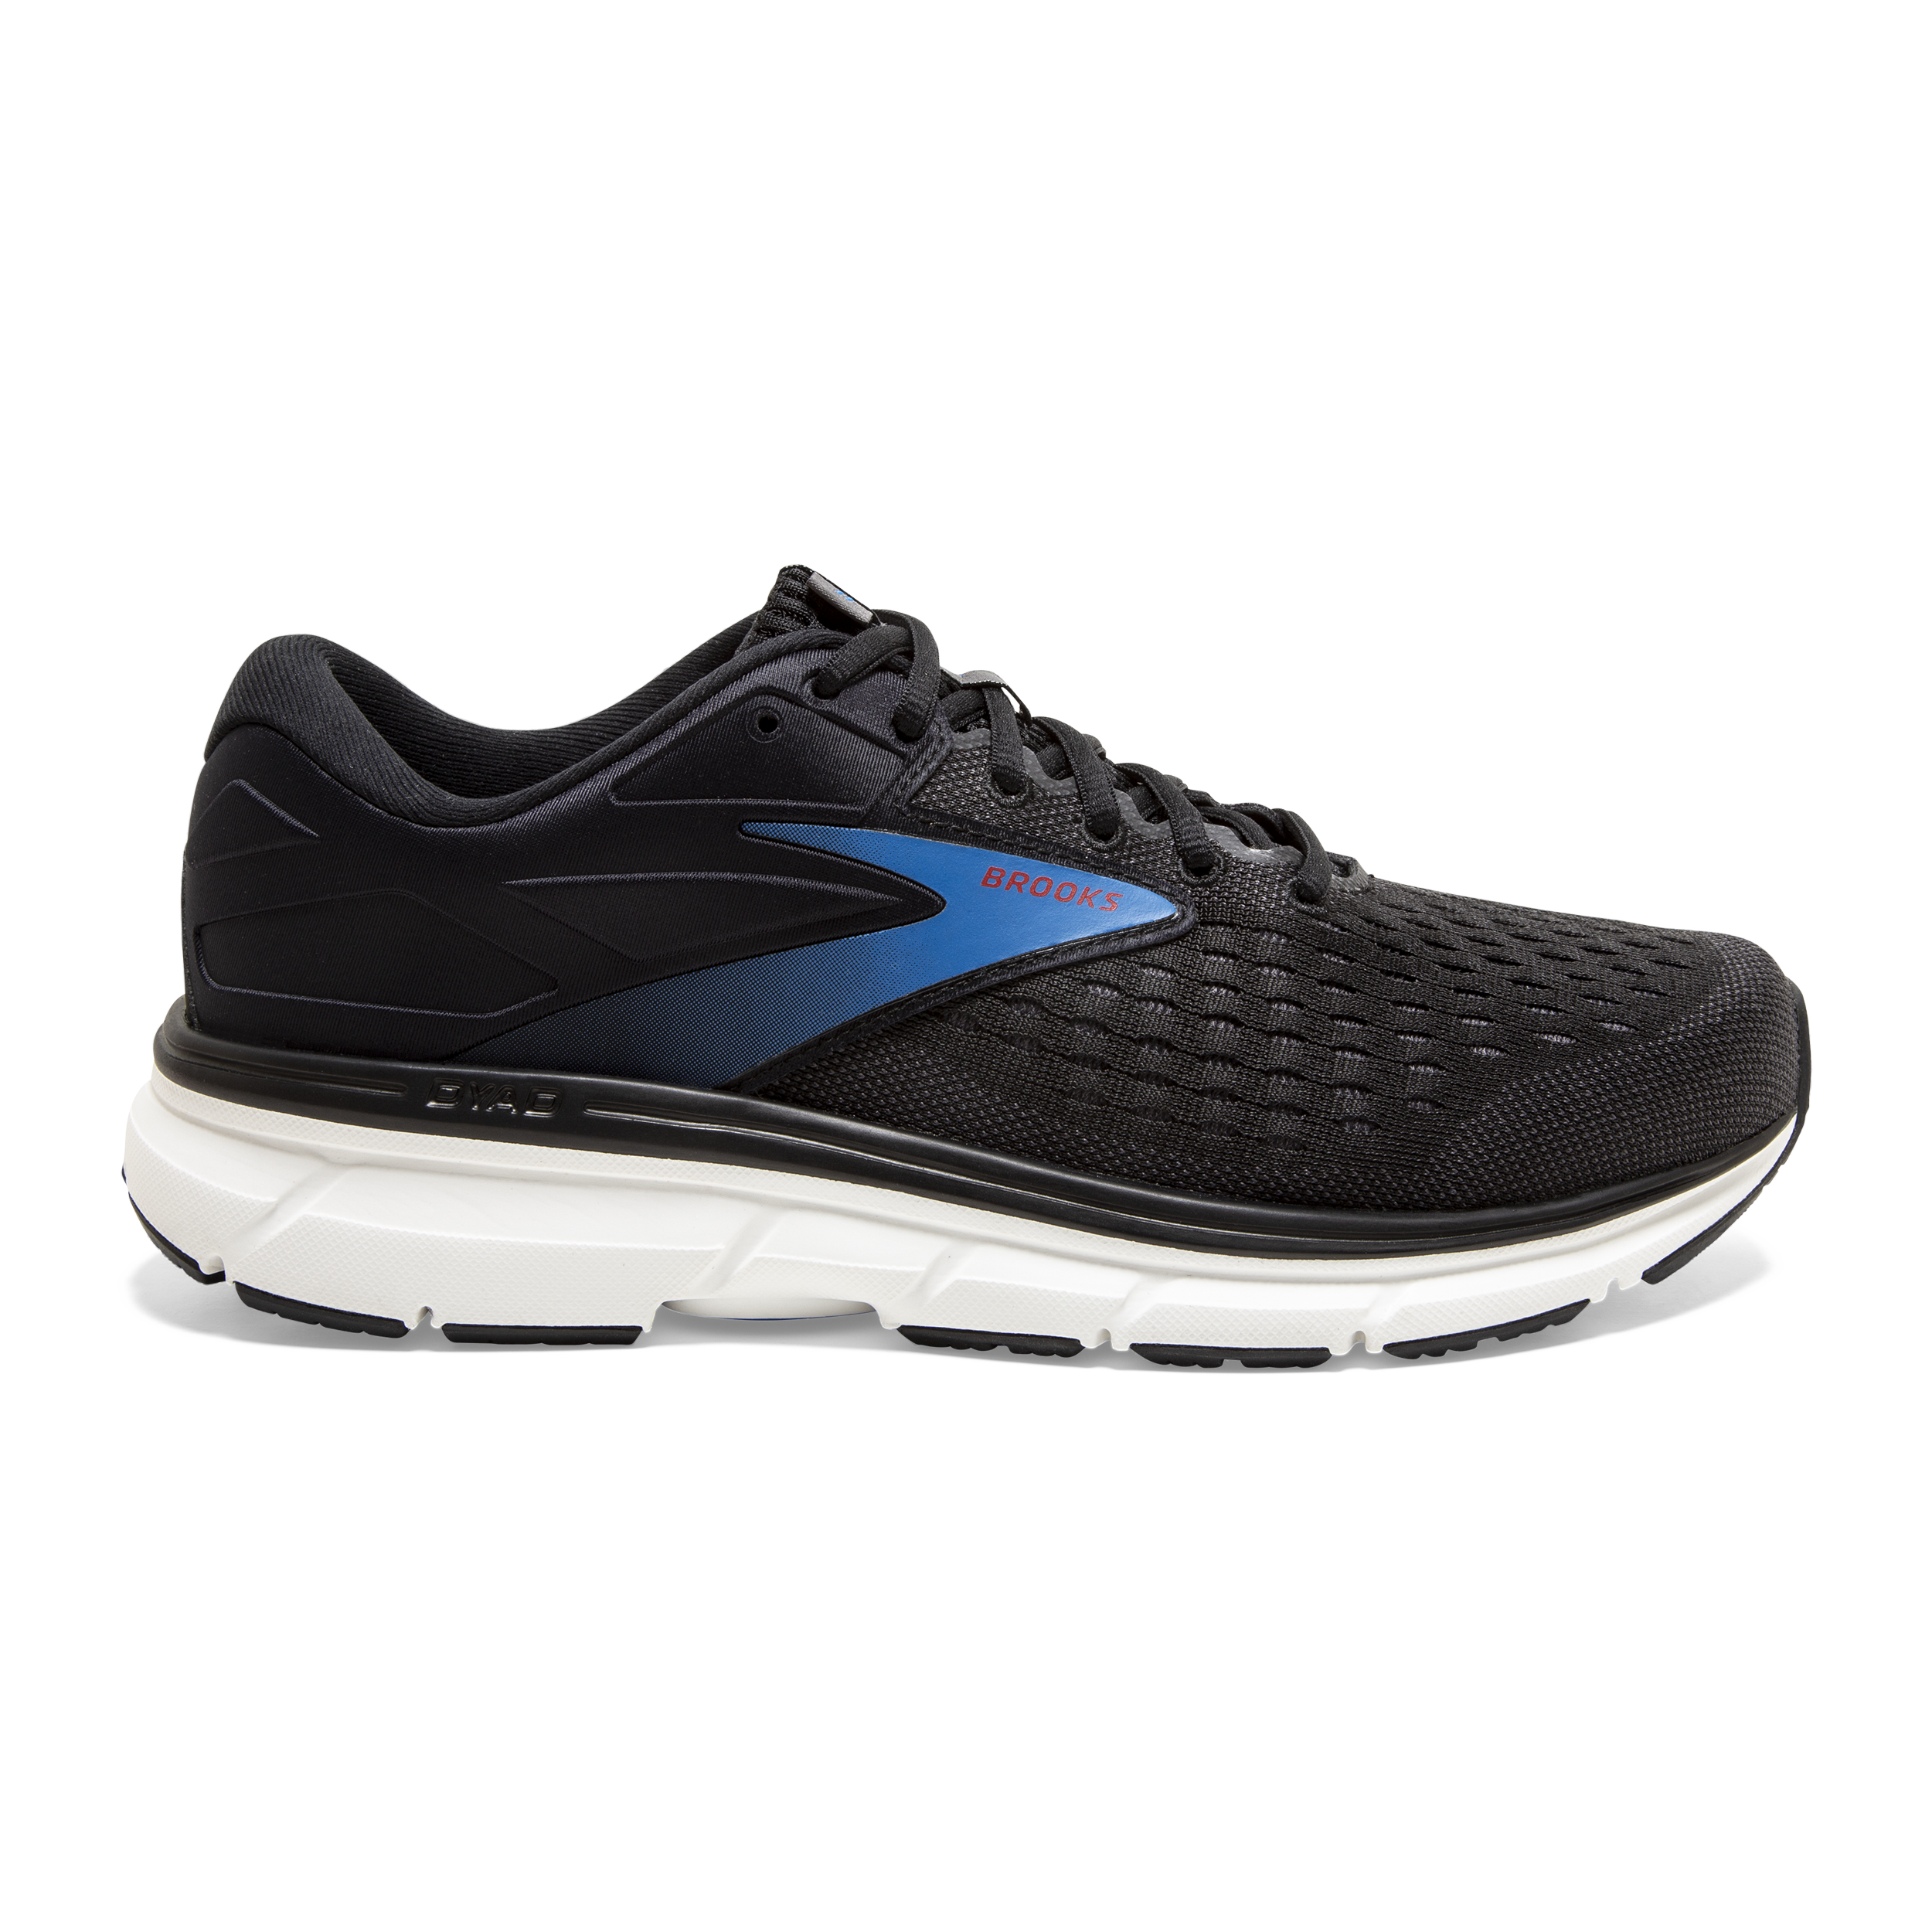 NIB Brooks Men's Dyad 9 Running Shoes 11 2E W US Asphalt/Electric Blue/Black 